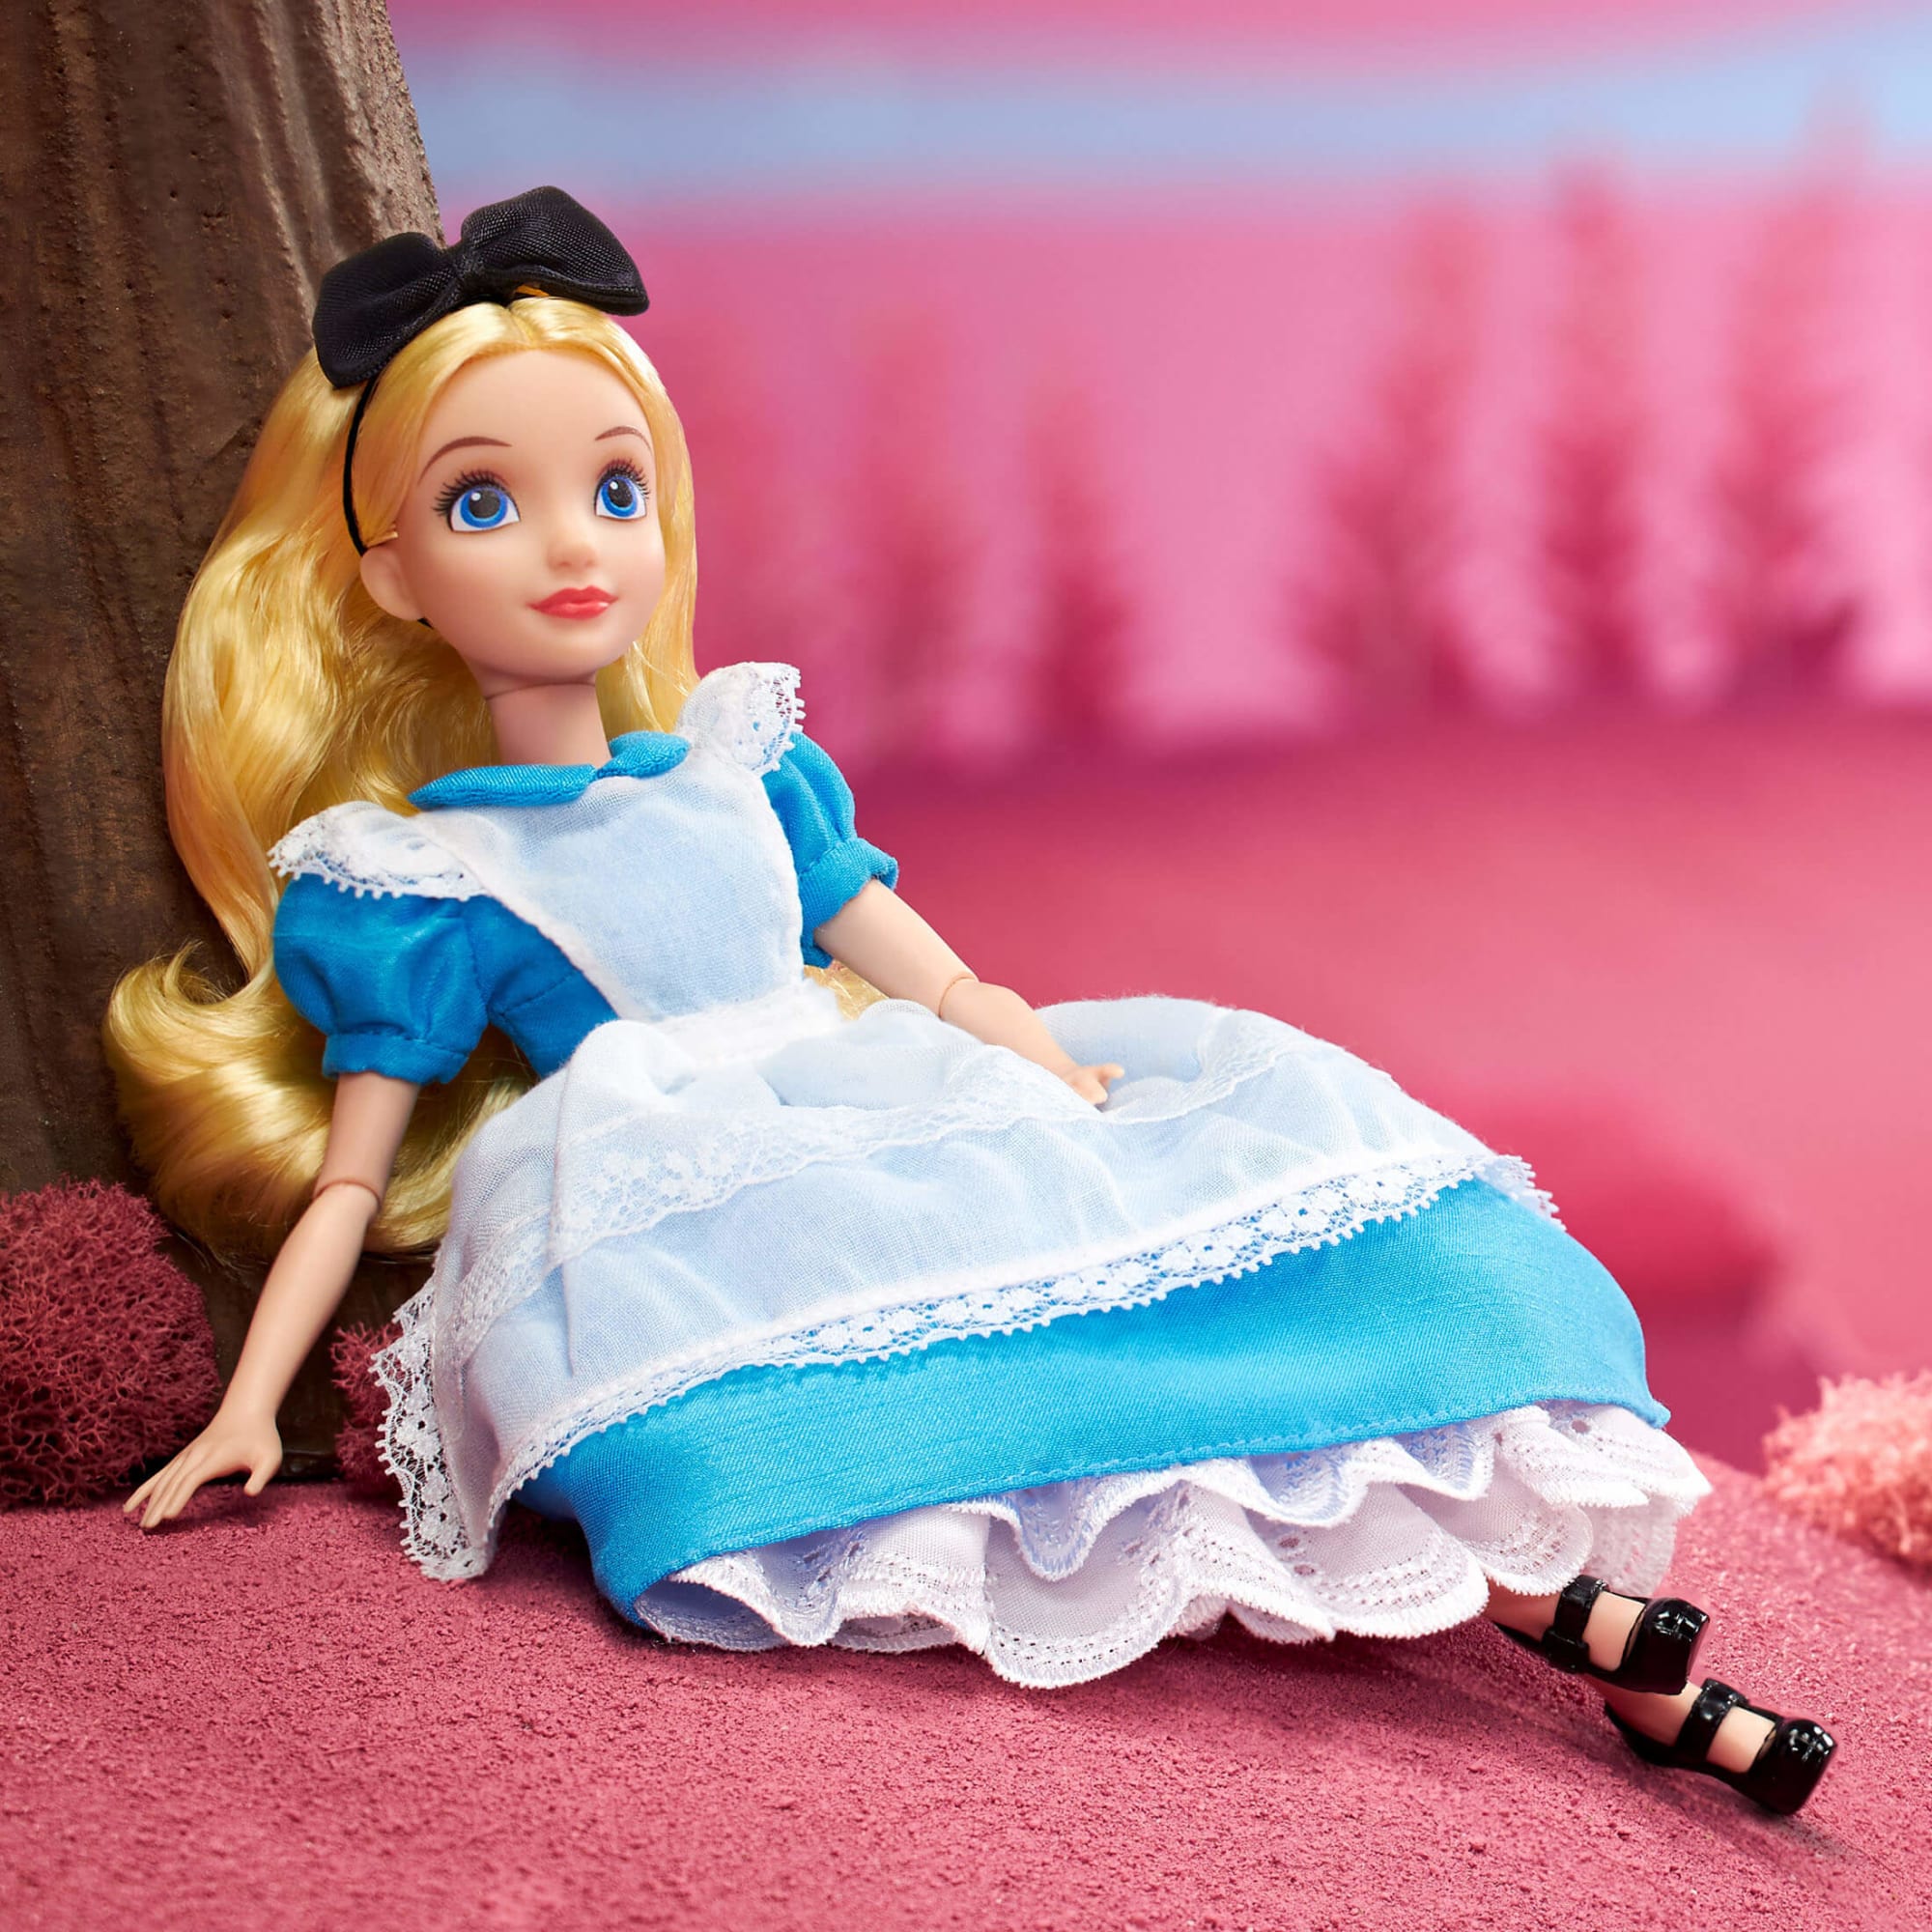 Disney, Other, Disney Alice In Wonderland Doll